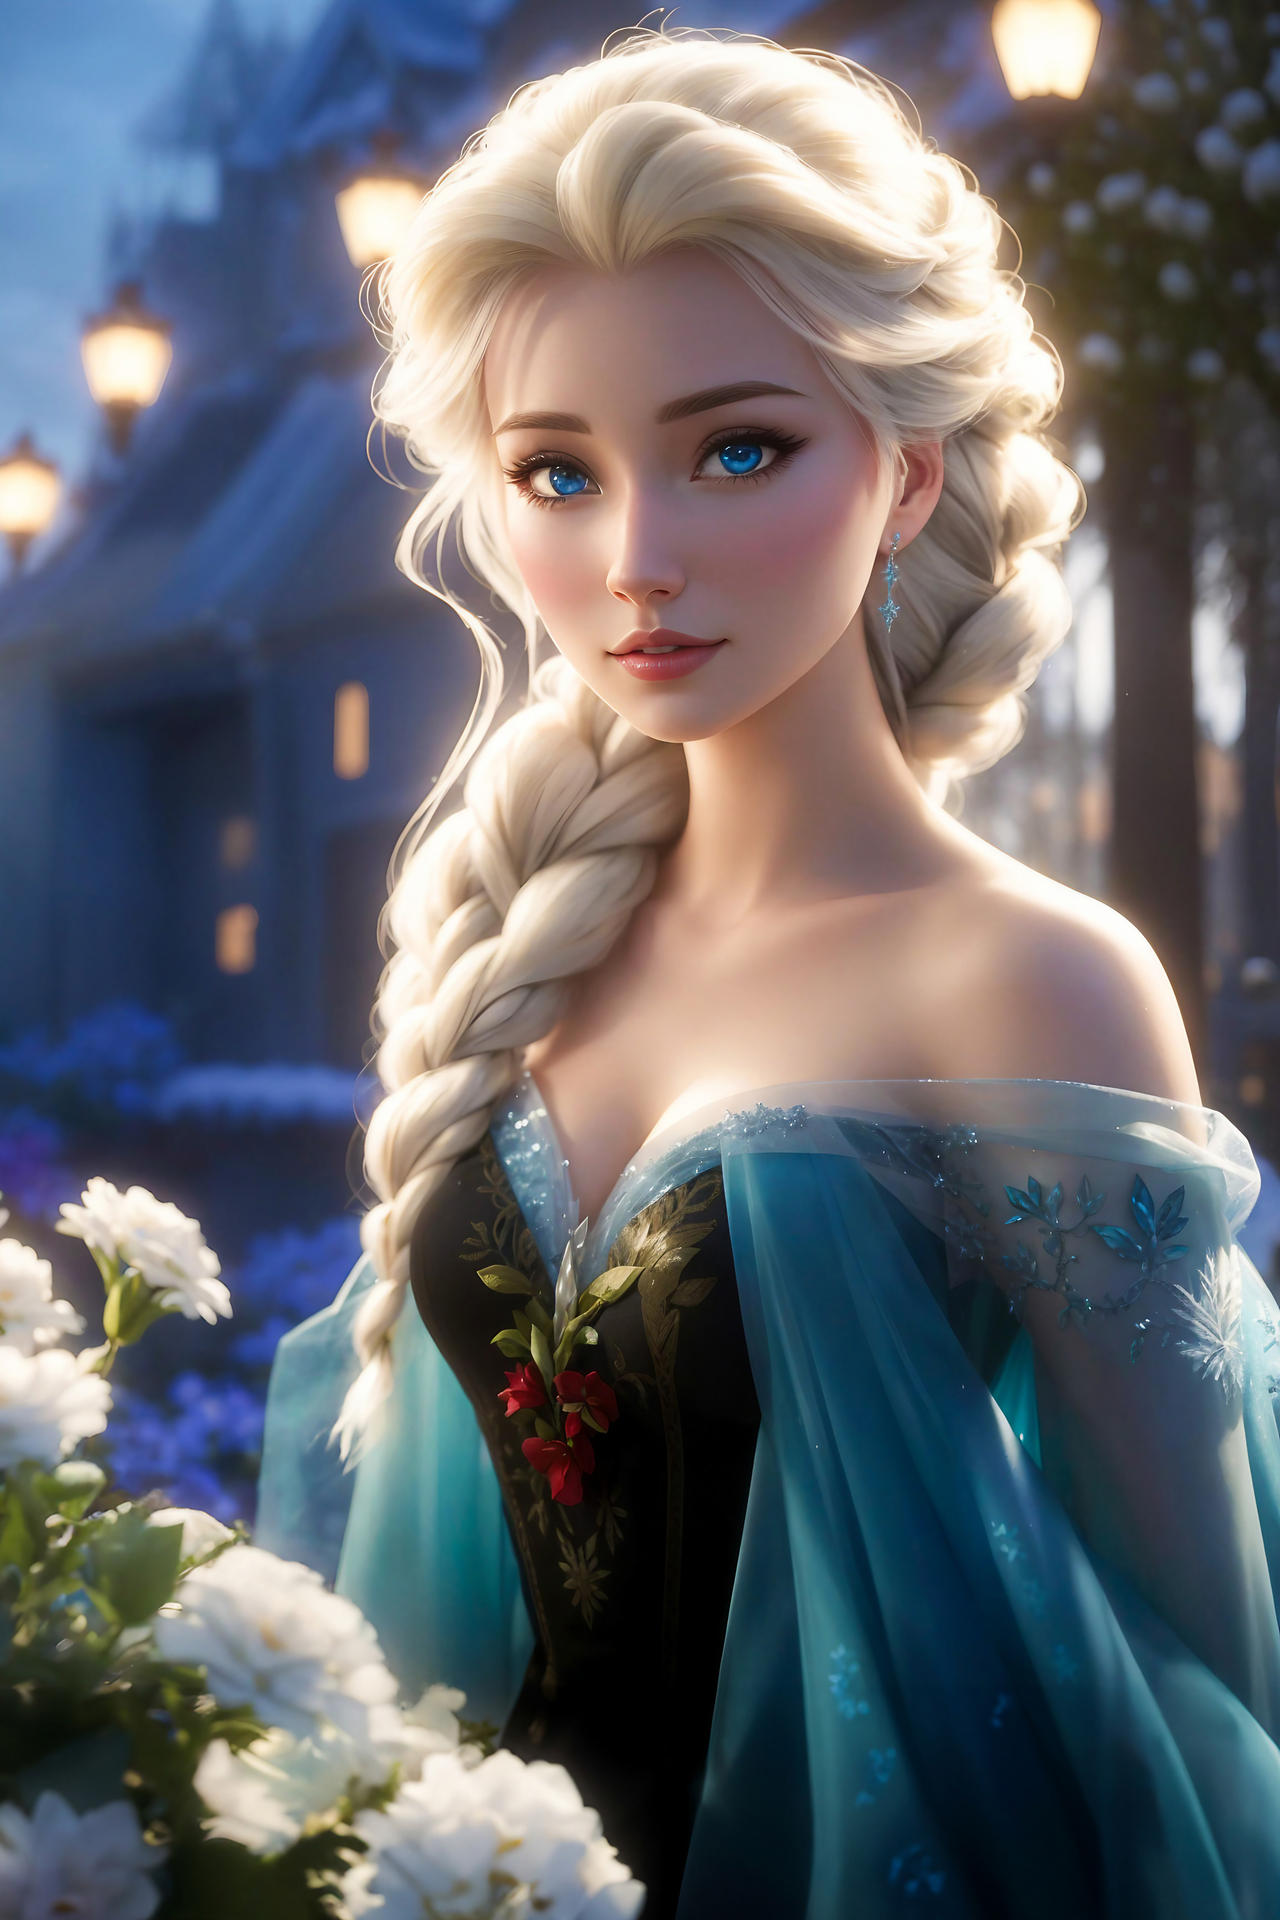 Elsa (Frozen) portrait by ComicOnly on DeviantArt